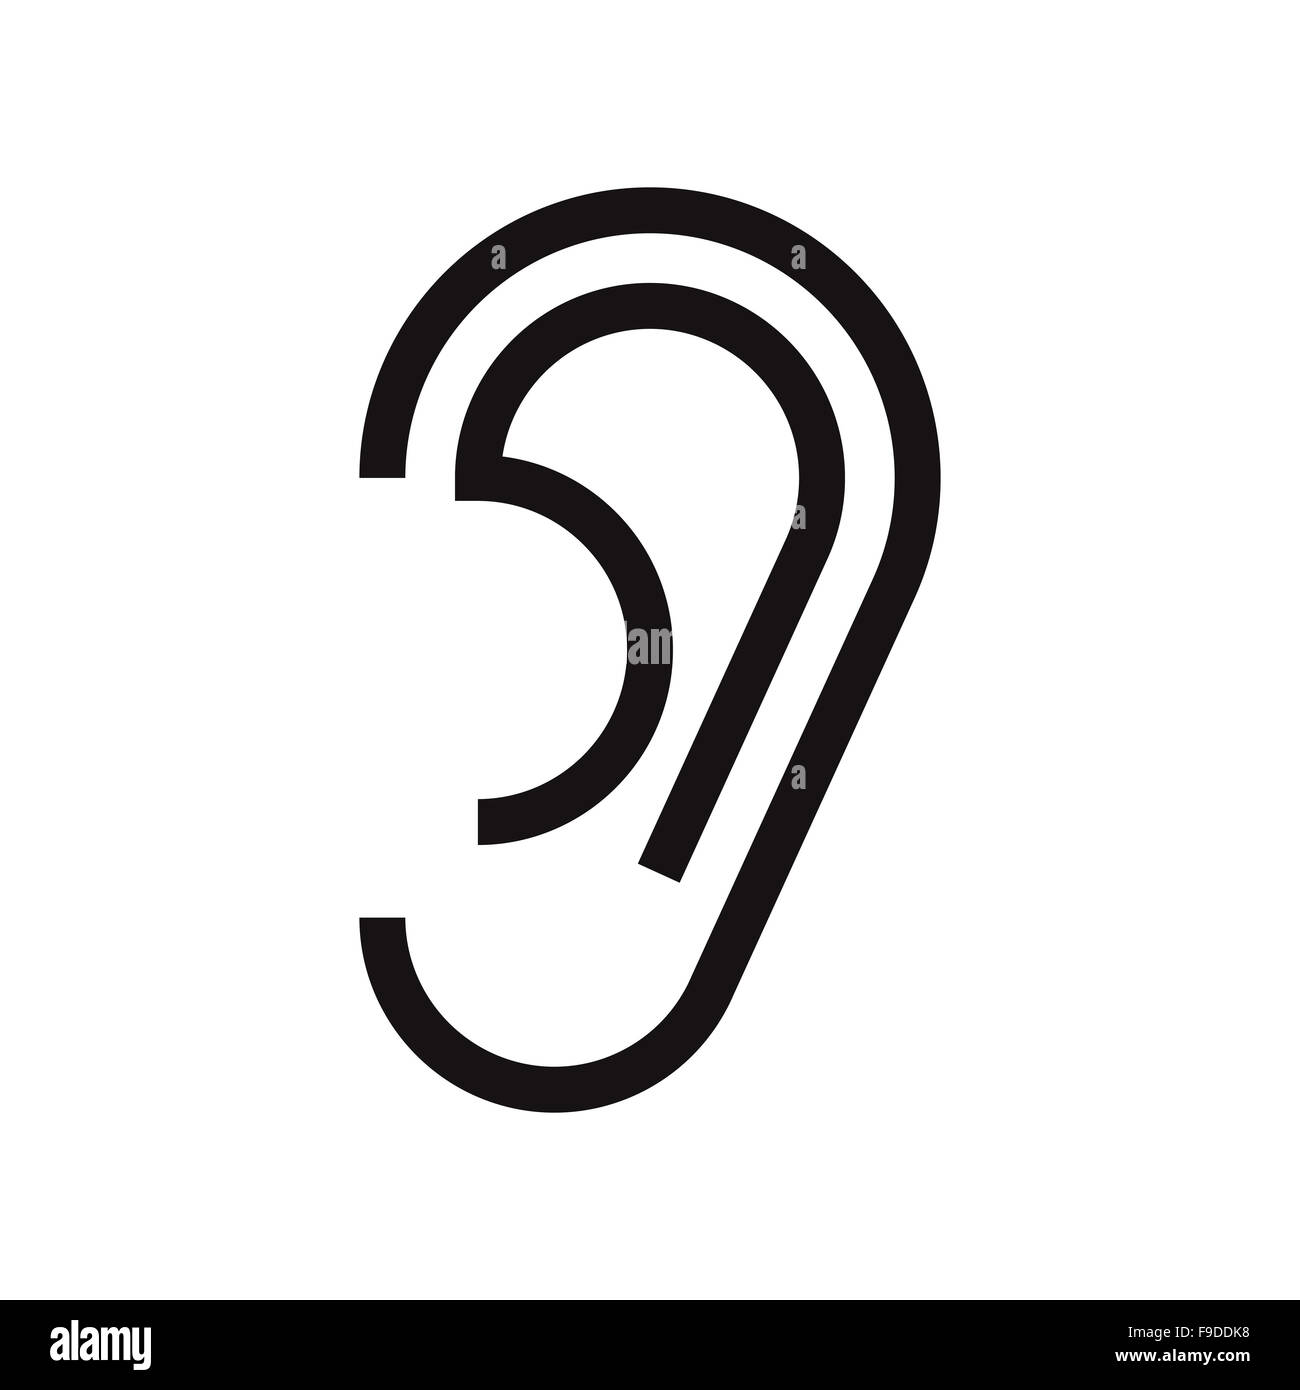 Ear icon isolated on white background Stock Photo